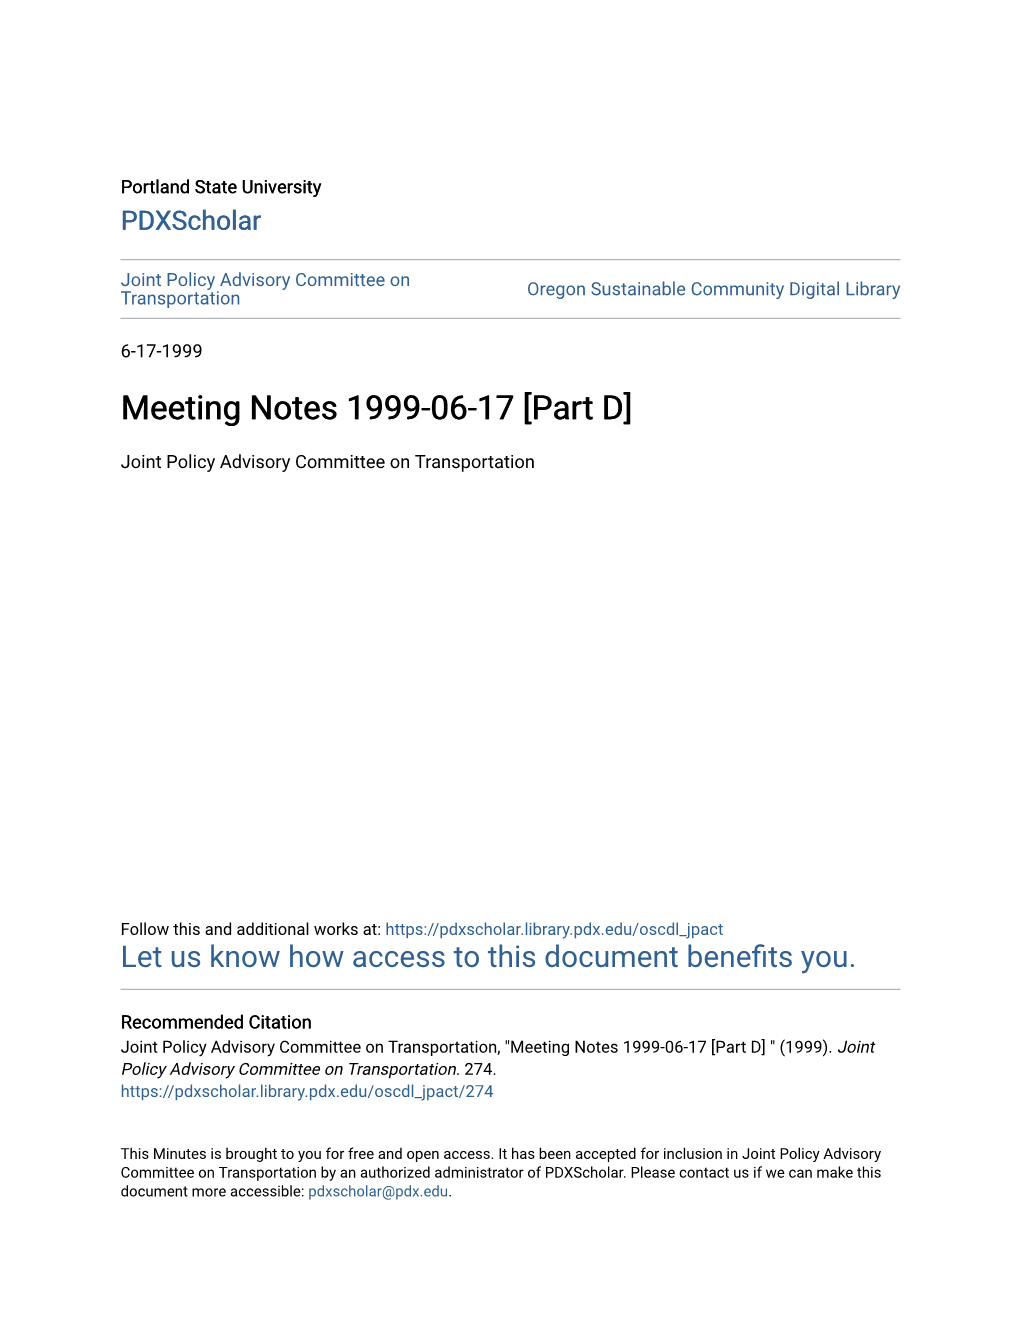 Meeting Notes 1999-06-17 [Part D]